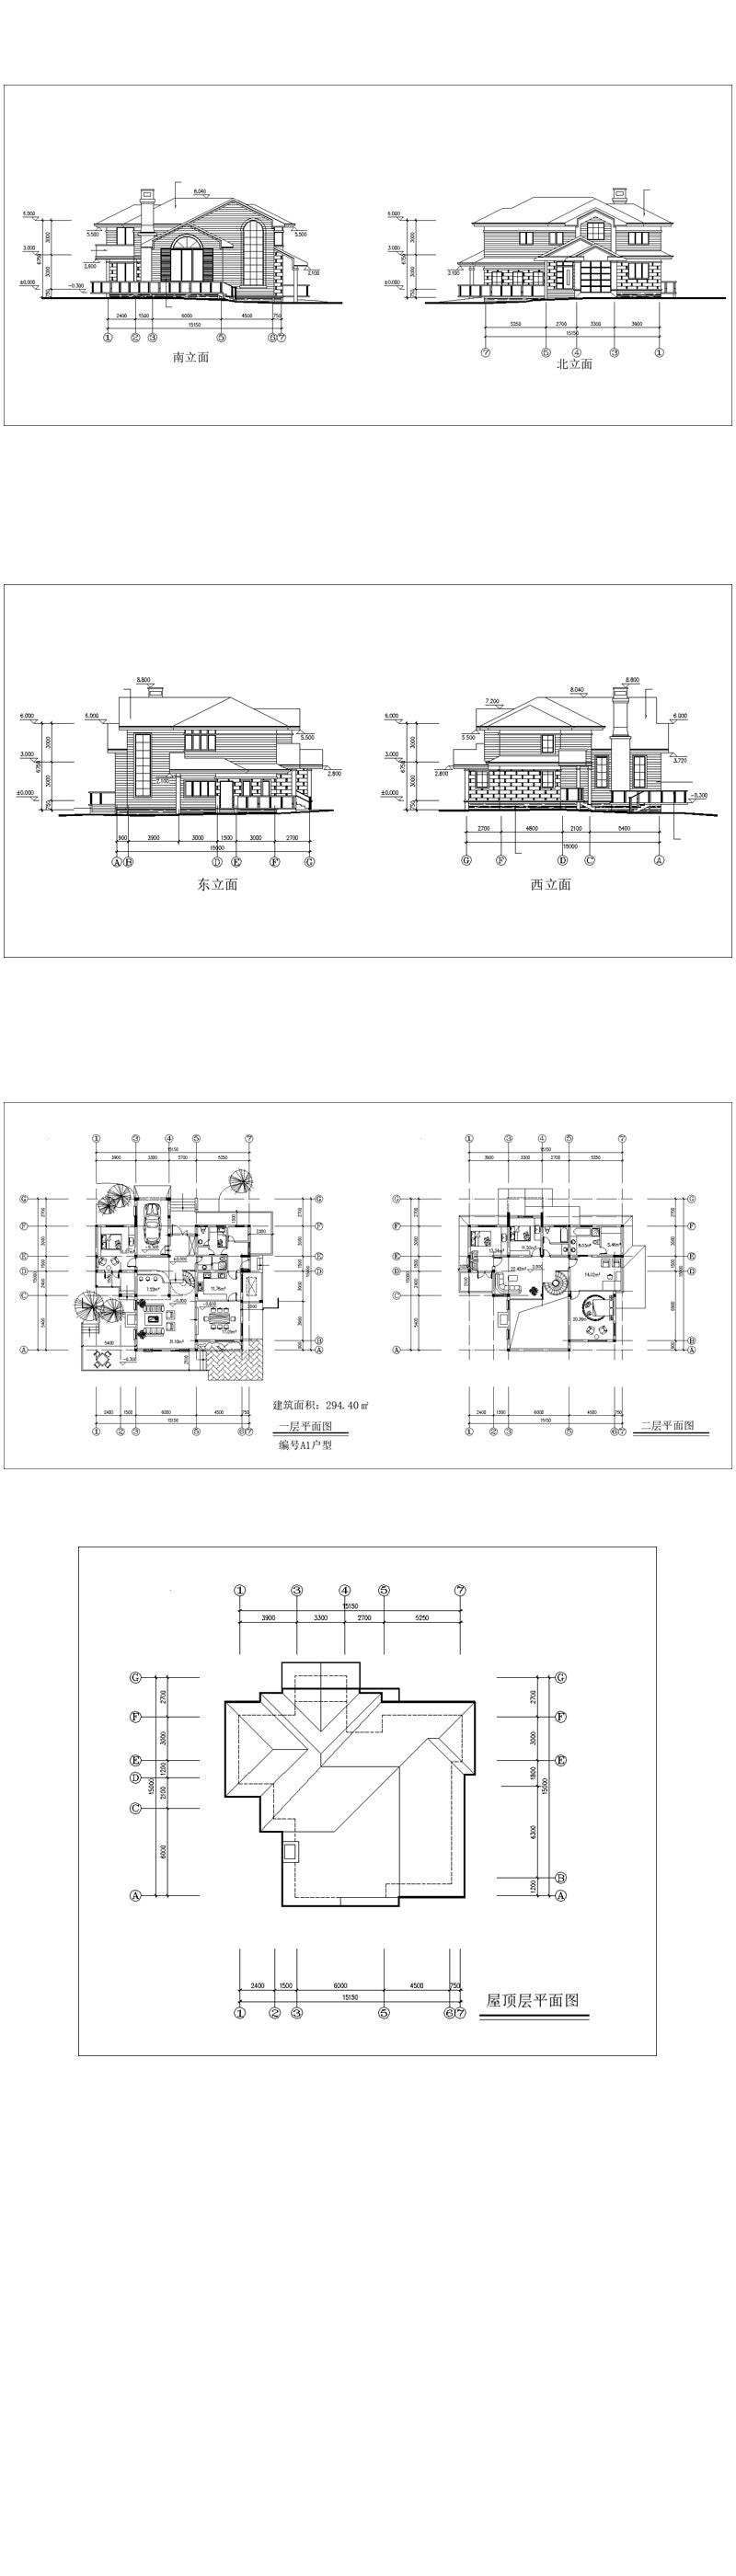 ★【Villa CAD Design,Details Project V.16】Chateau,Manor,Mansion,Villa@Autocad Blocks,Drawings,CAD Details,Elevation